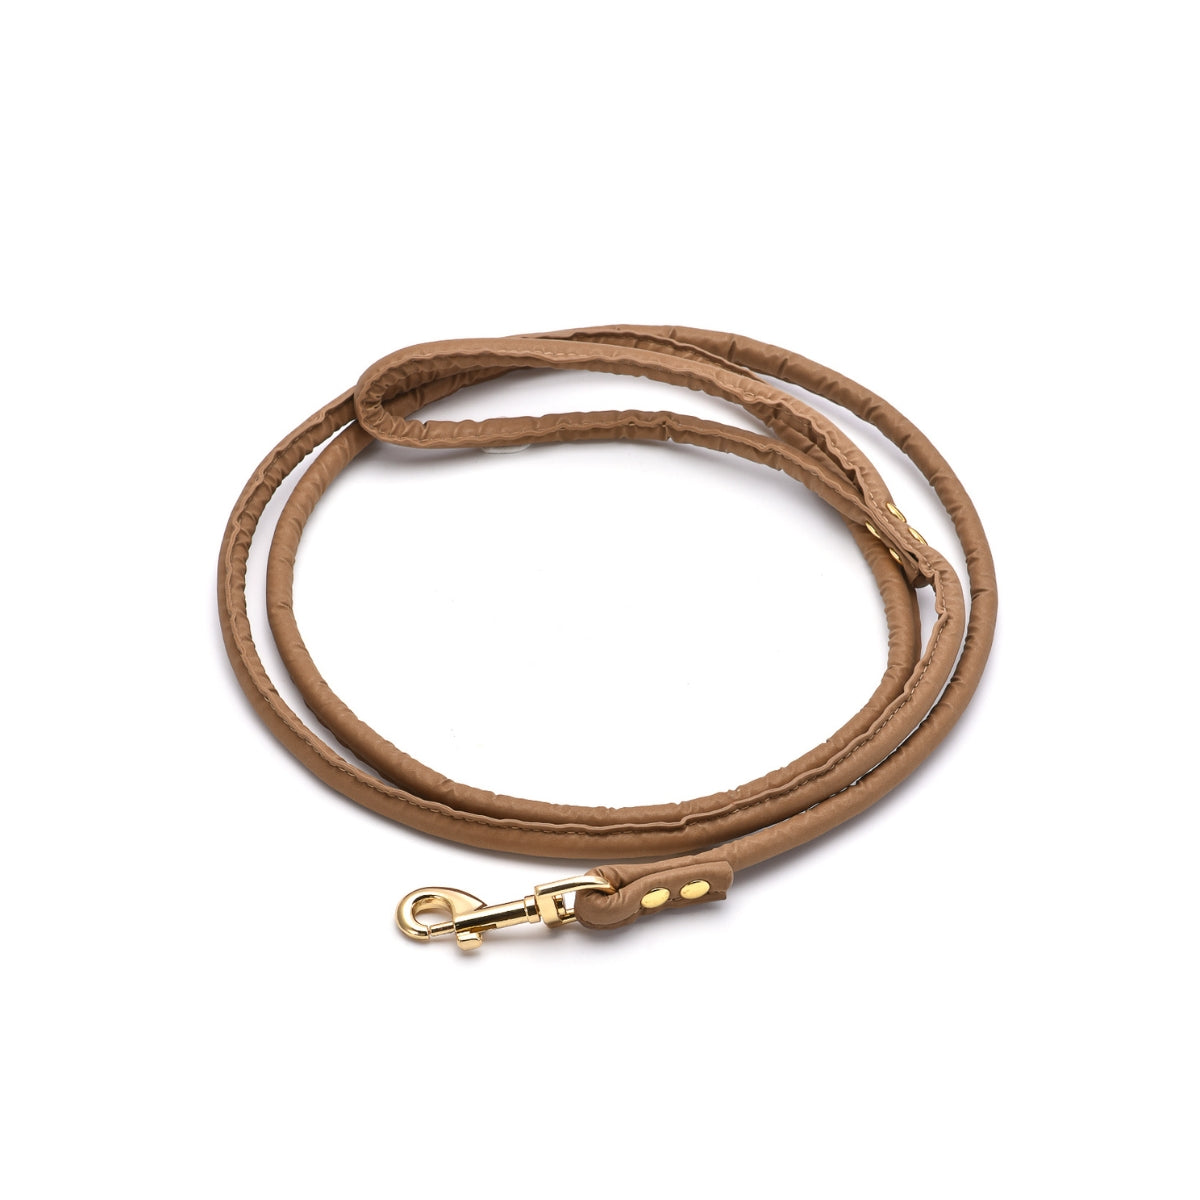 reflective-bronze-dog-leash-medium.jpg